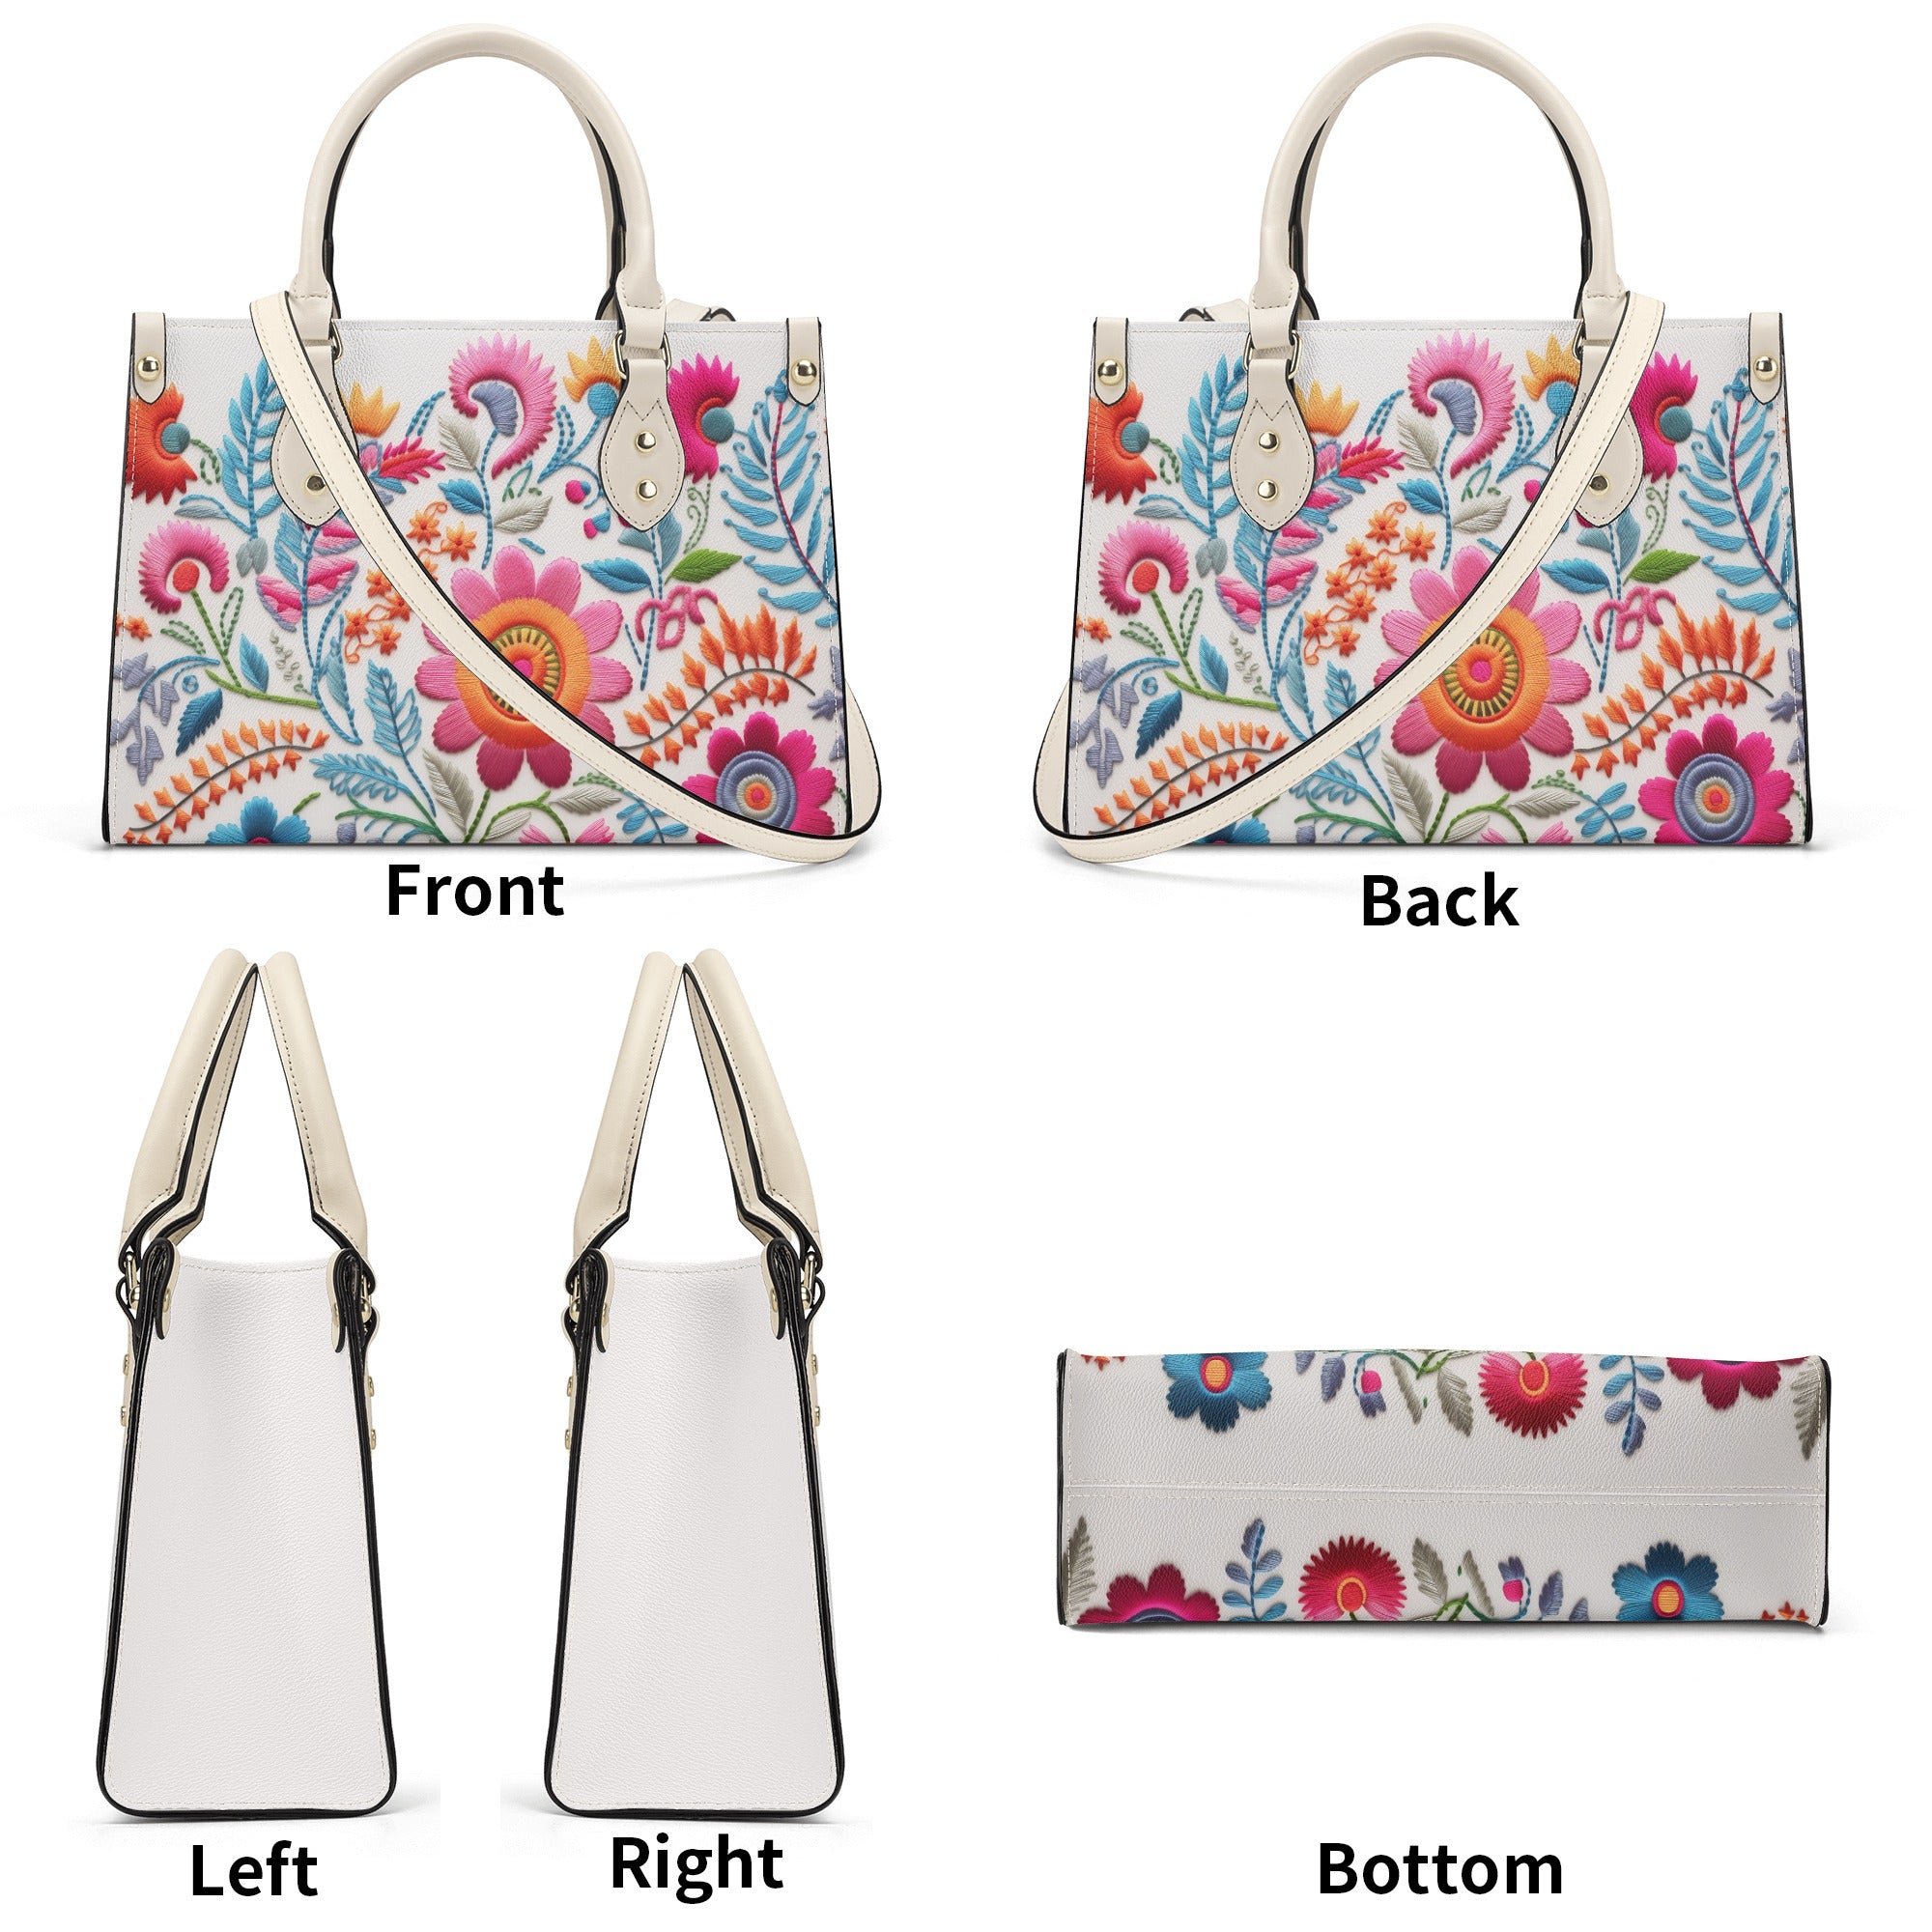 Embroidered Blossom Print Handbag - Timeless & Chic